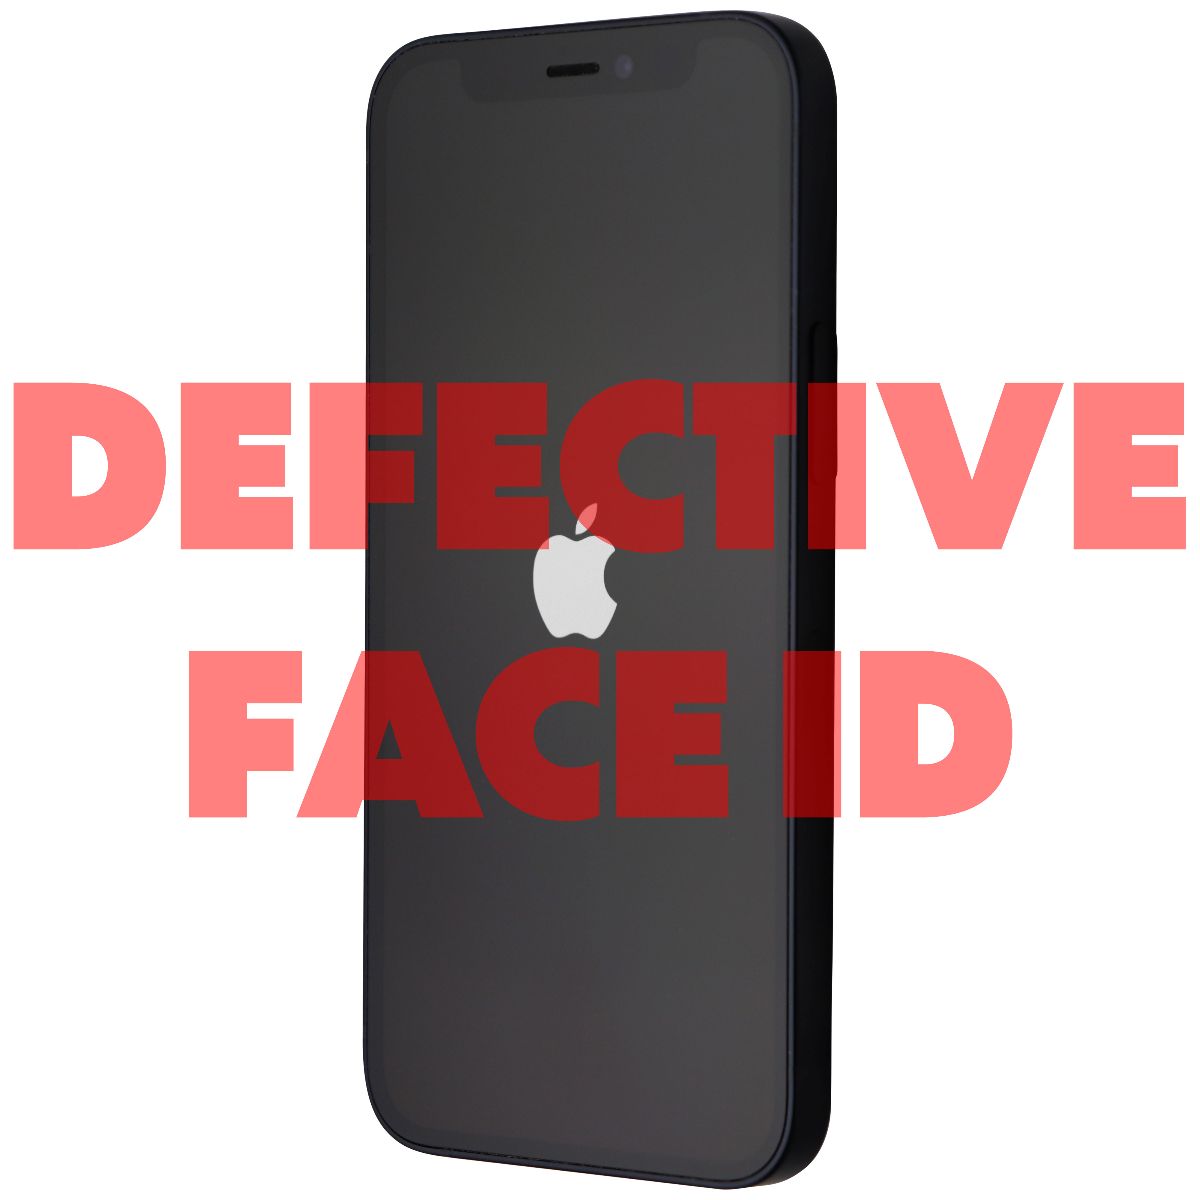 Apple iPhone 12 mini (5.4-inch) (A2176) Unlocked - 64GB/Black *Bad Face ID